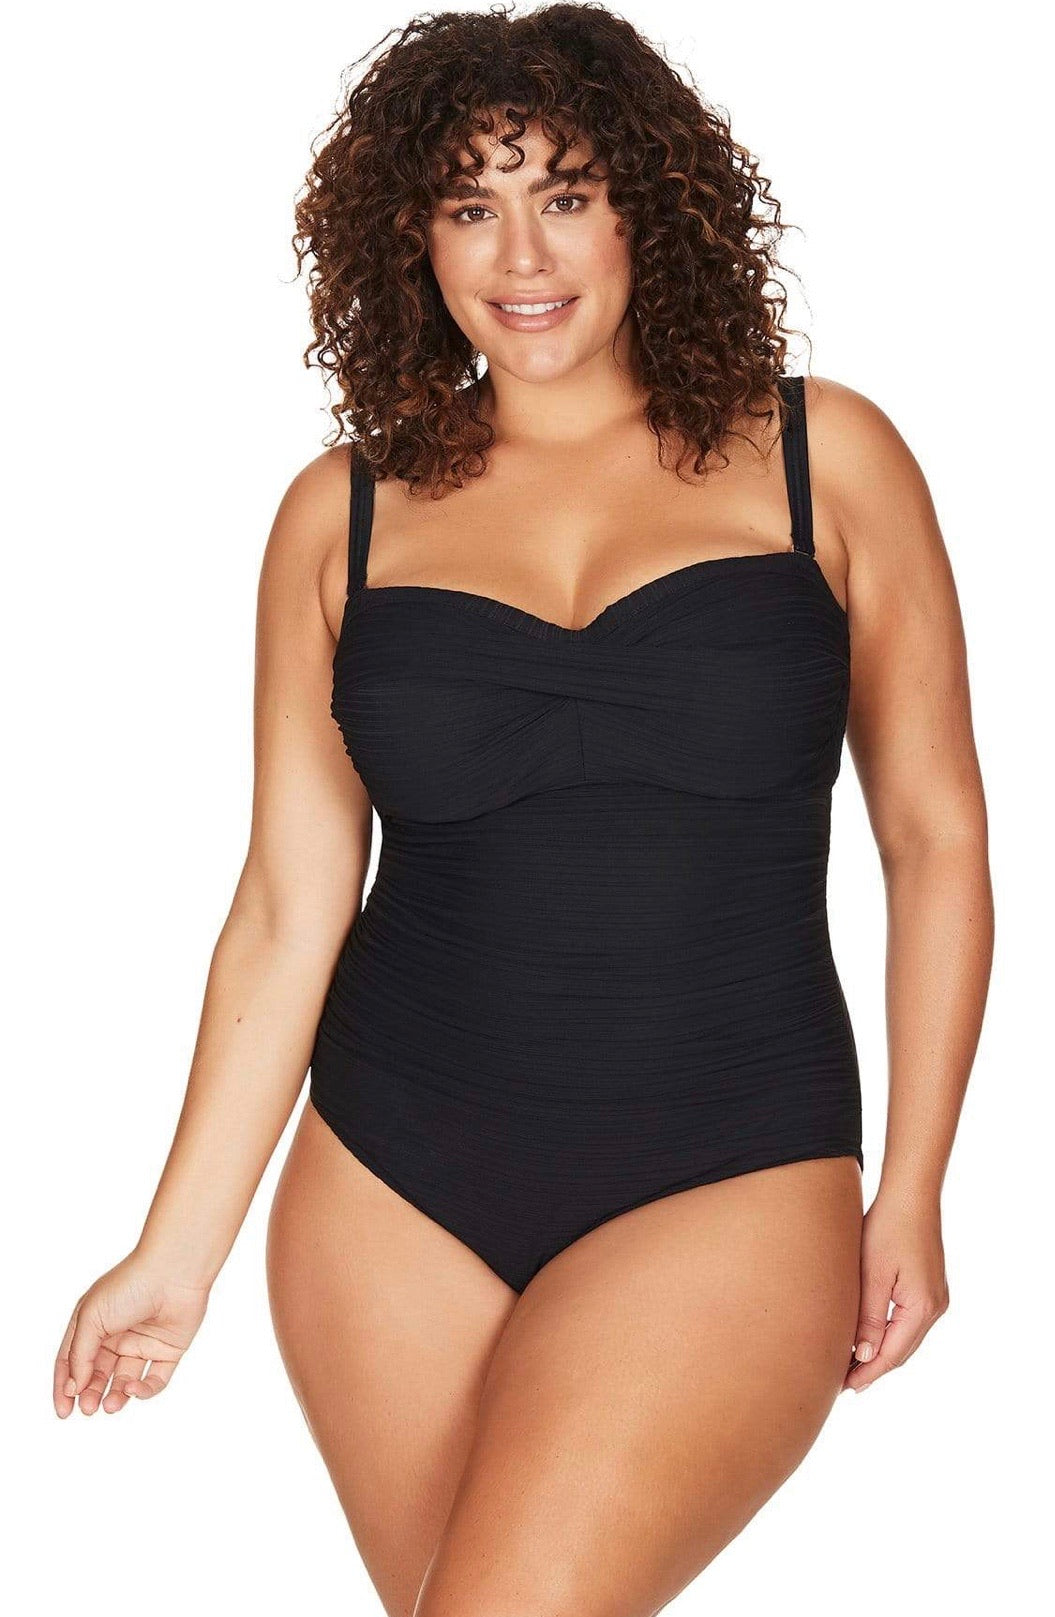 Swimsuits For All Women's Plus Size Bandeau Blouson Tankini Set 8 Wild  Multi, Black